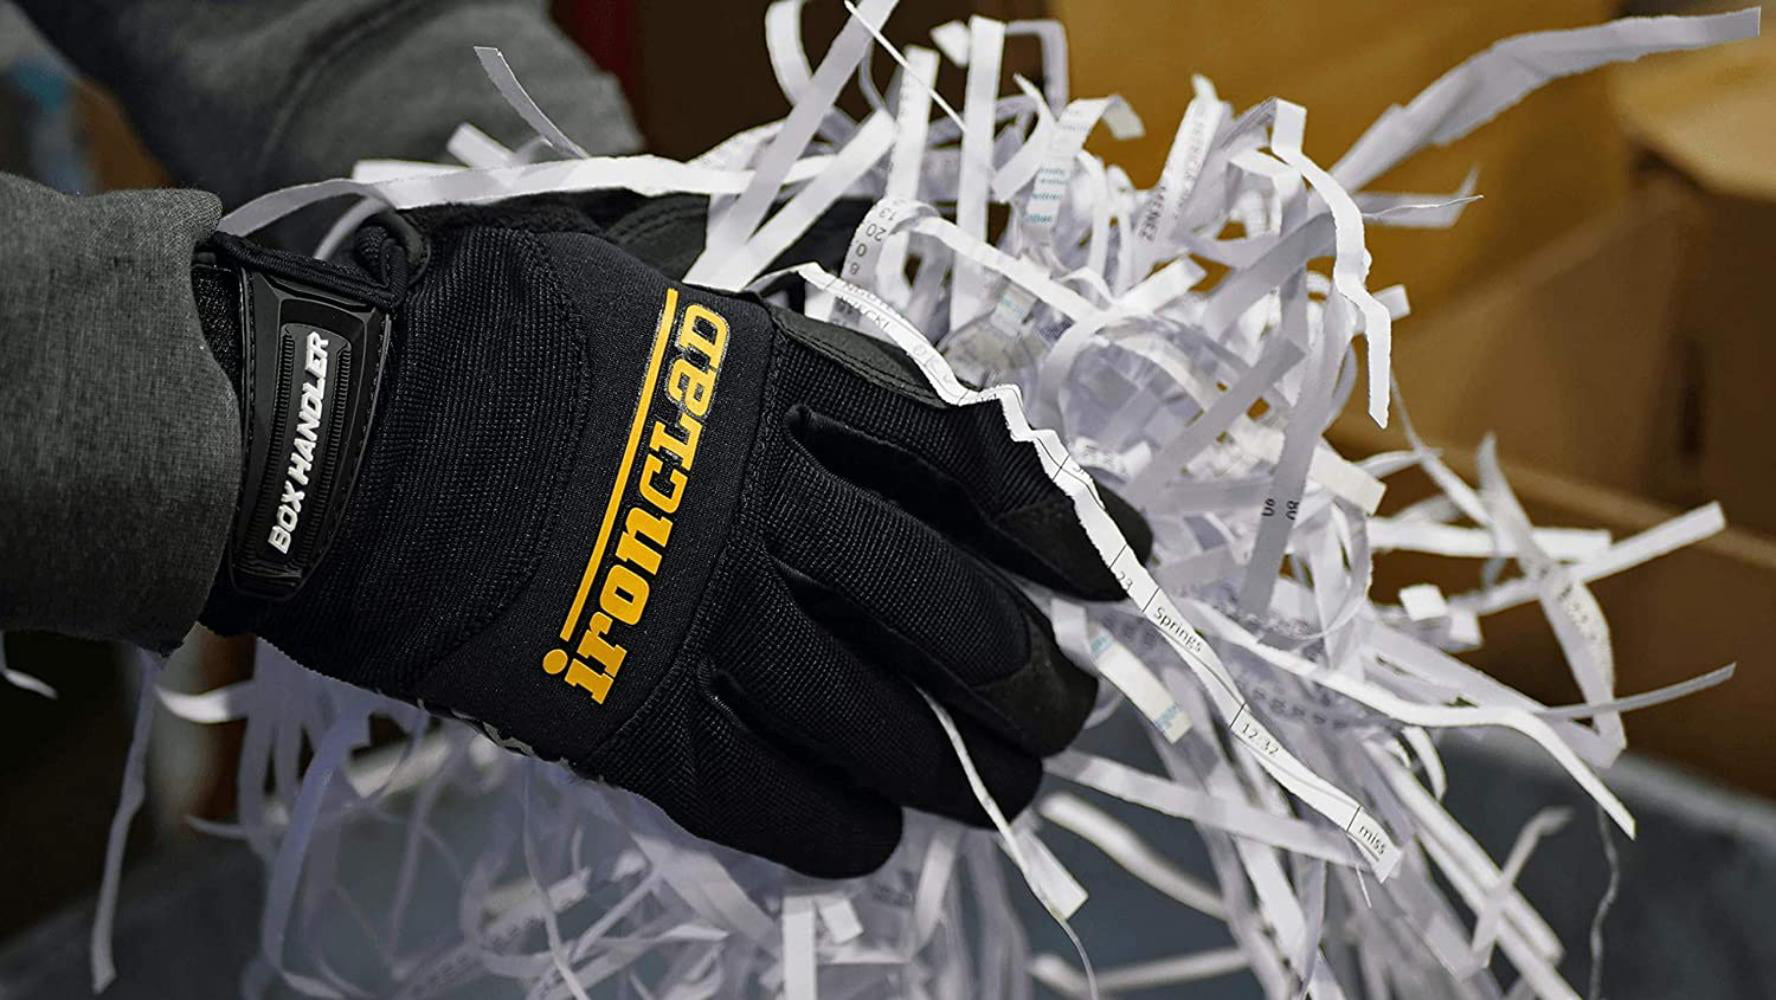 Extreme X-Large Black/Yellow/Grey Ironclad Box Handler Work Gloves BHG 